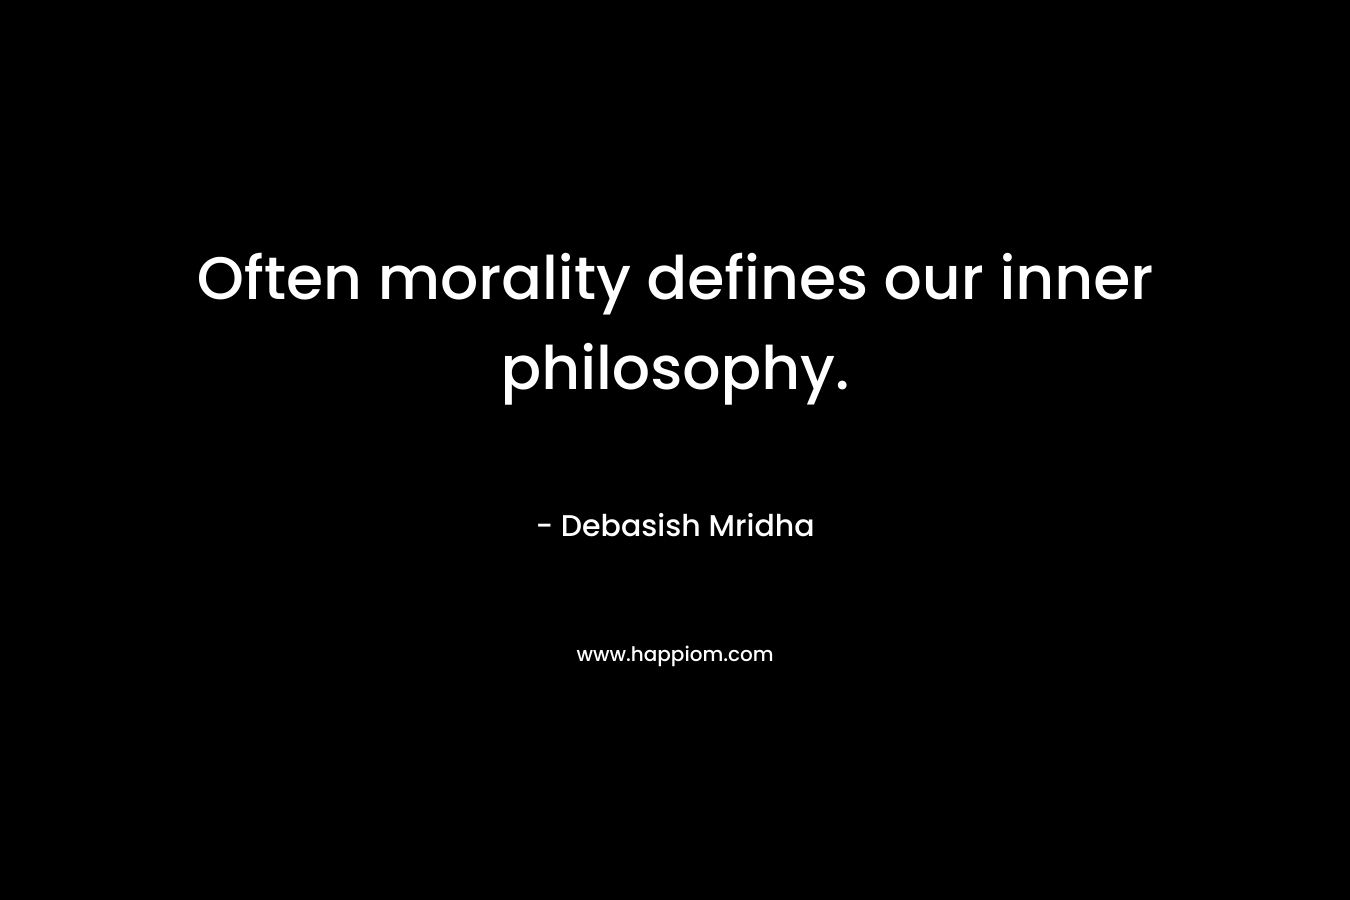 Often morality defines our inner philosophy.